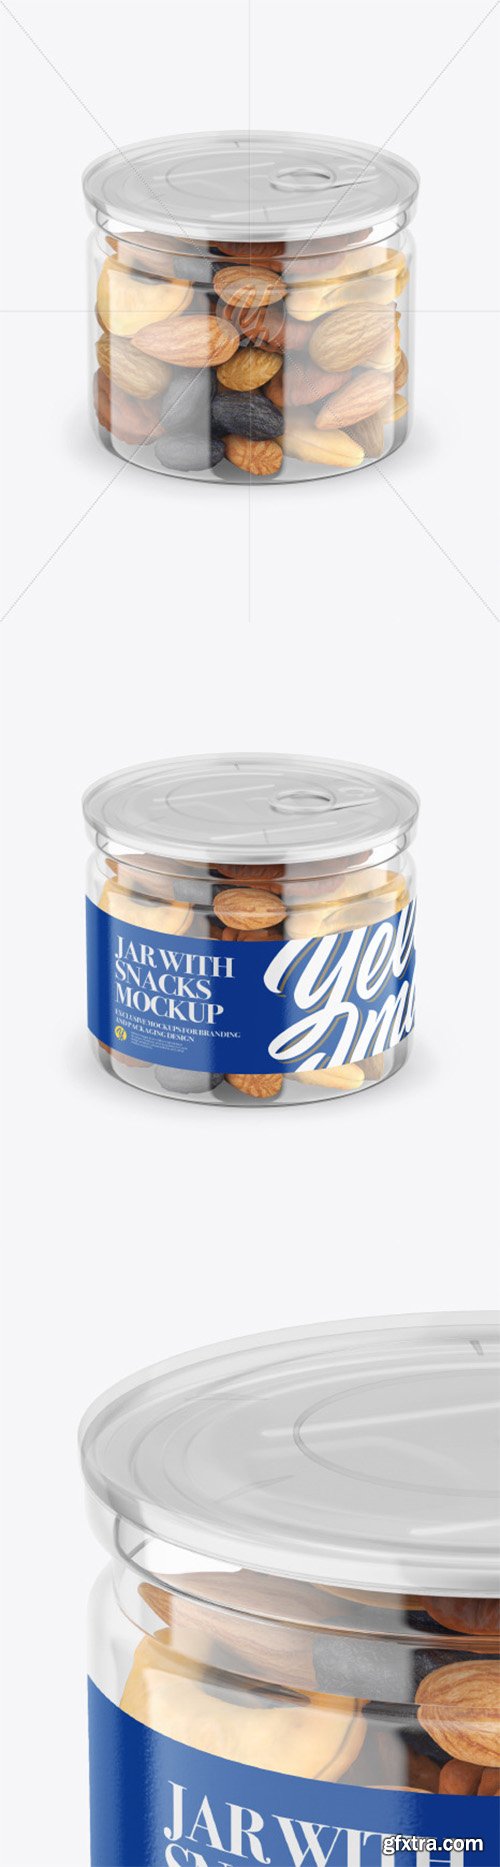 Jar with Snacks Mockup 49541